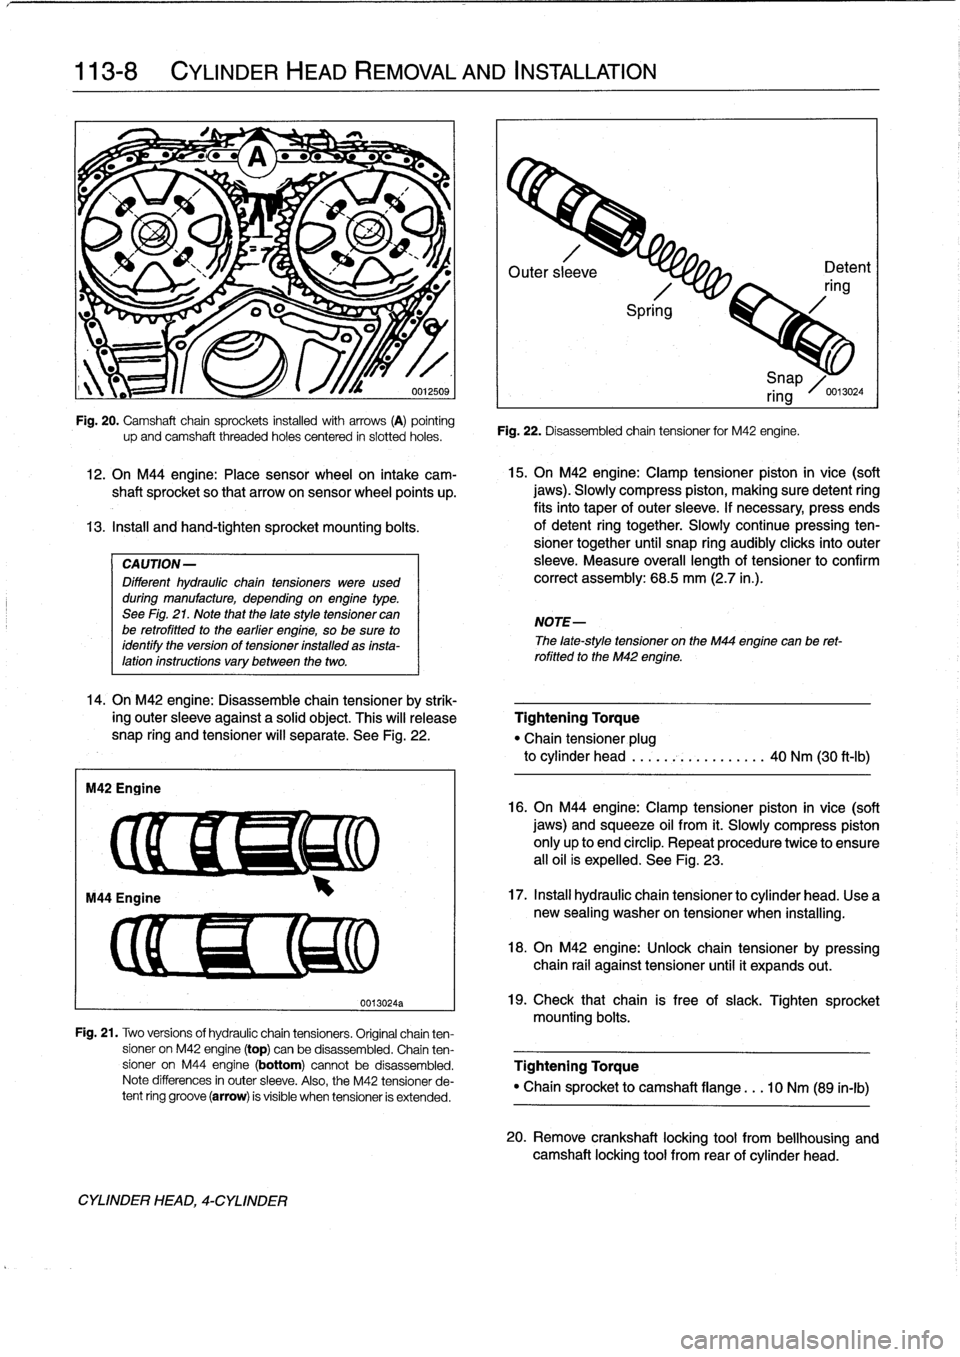 BMW 323i 1998 E36 Workshop Manual 
113-8

	

CYLINDER
HEAD
REMOVAL
AND
INSTALLATION

IW?
-
L
/~f
W

	

~
4r

"

-
"

	

;,s
1

12
.
On
M44
engine
:
Place
sensor
wheel
on
intake
cam-
shaft
sprocket
so
that
arrowon
sensor
wheel
points
